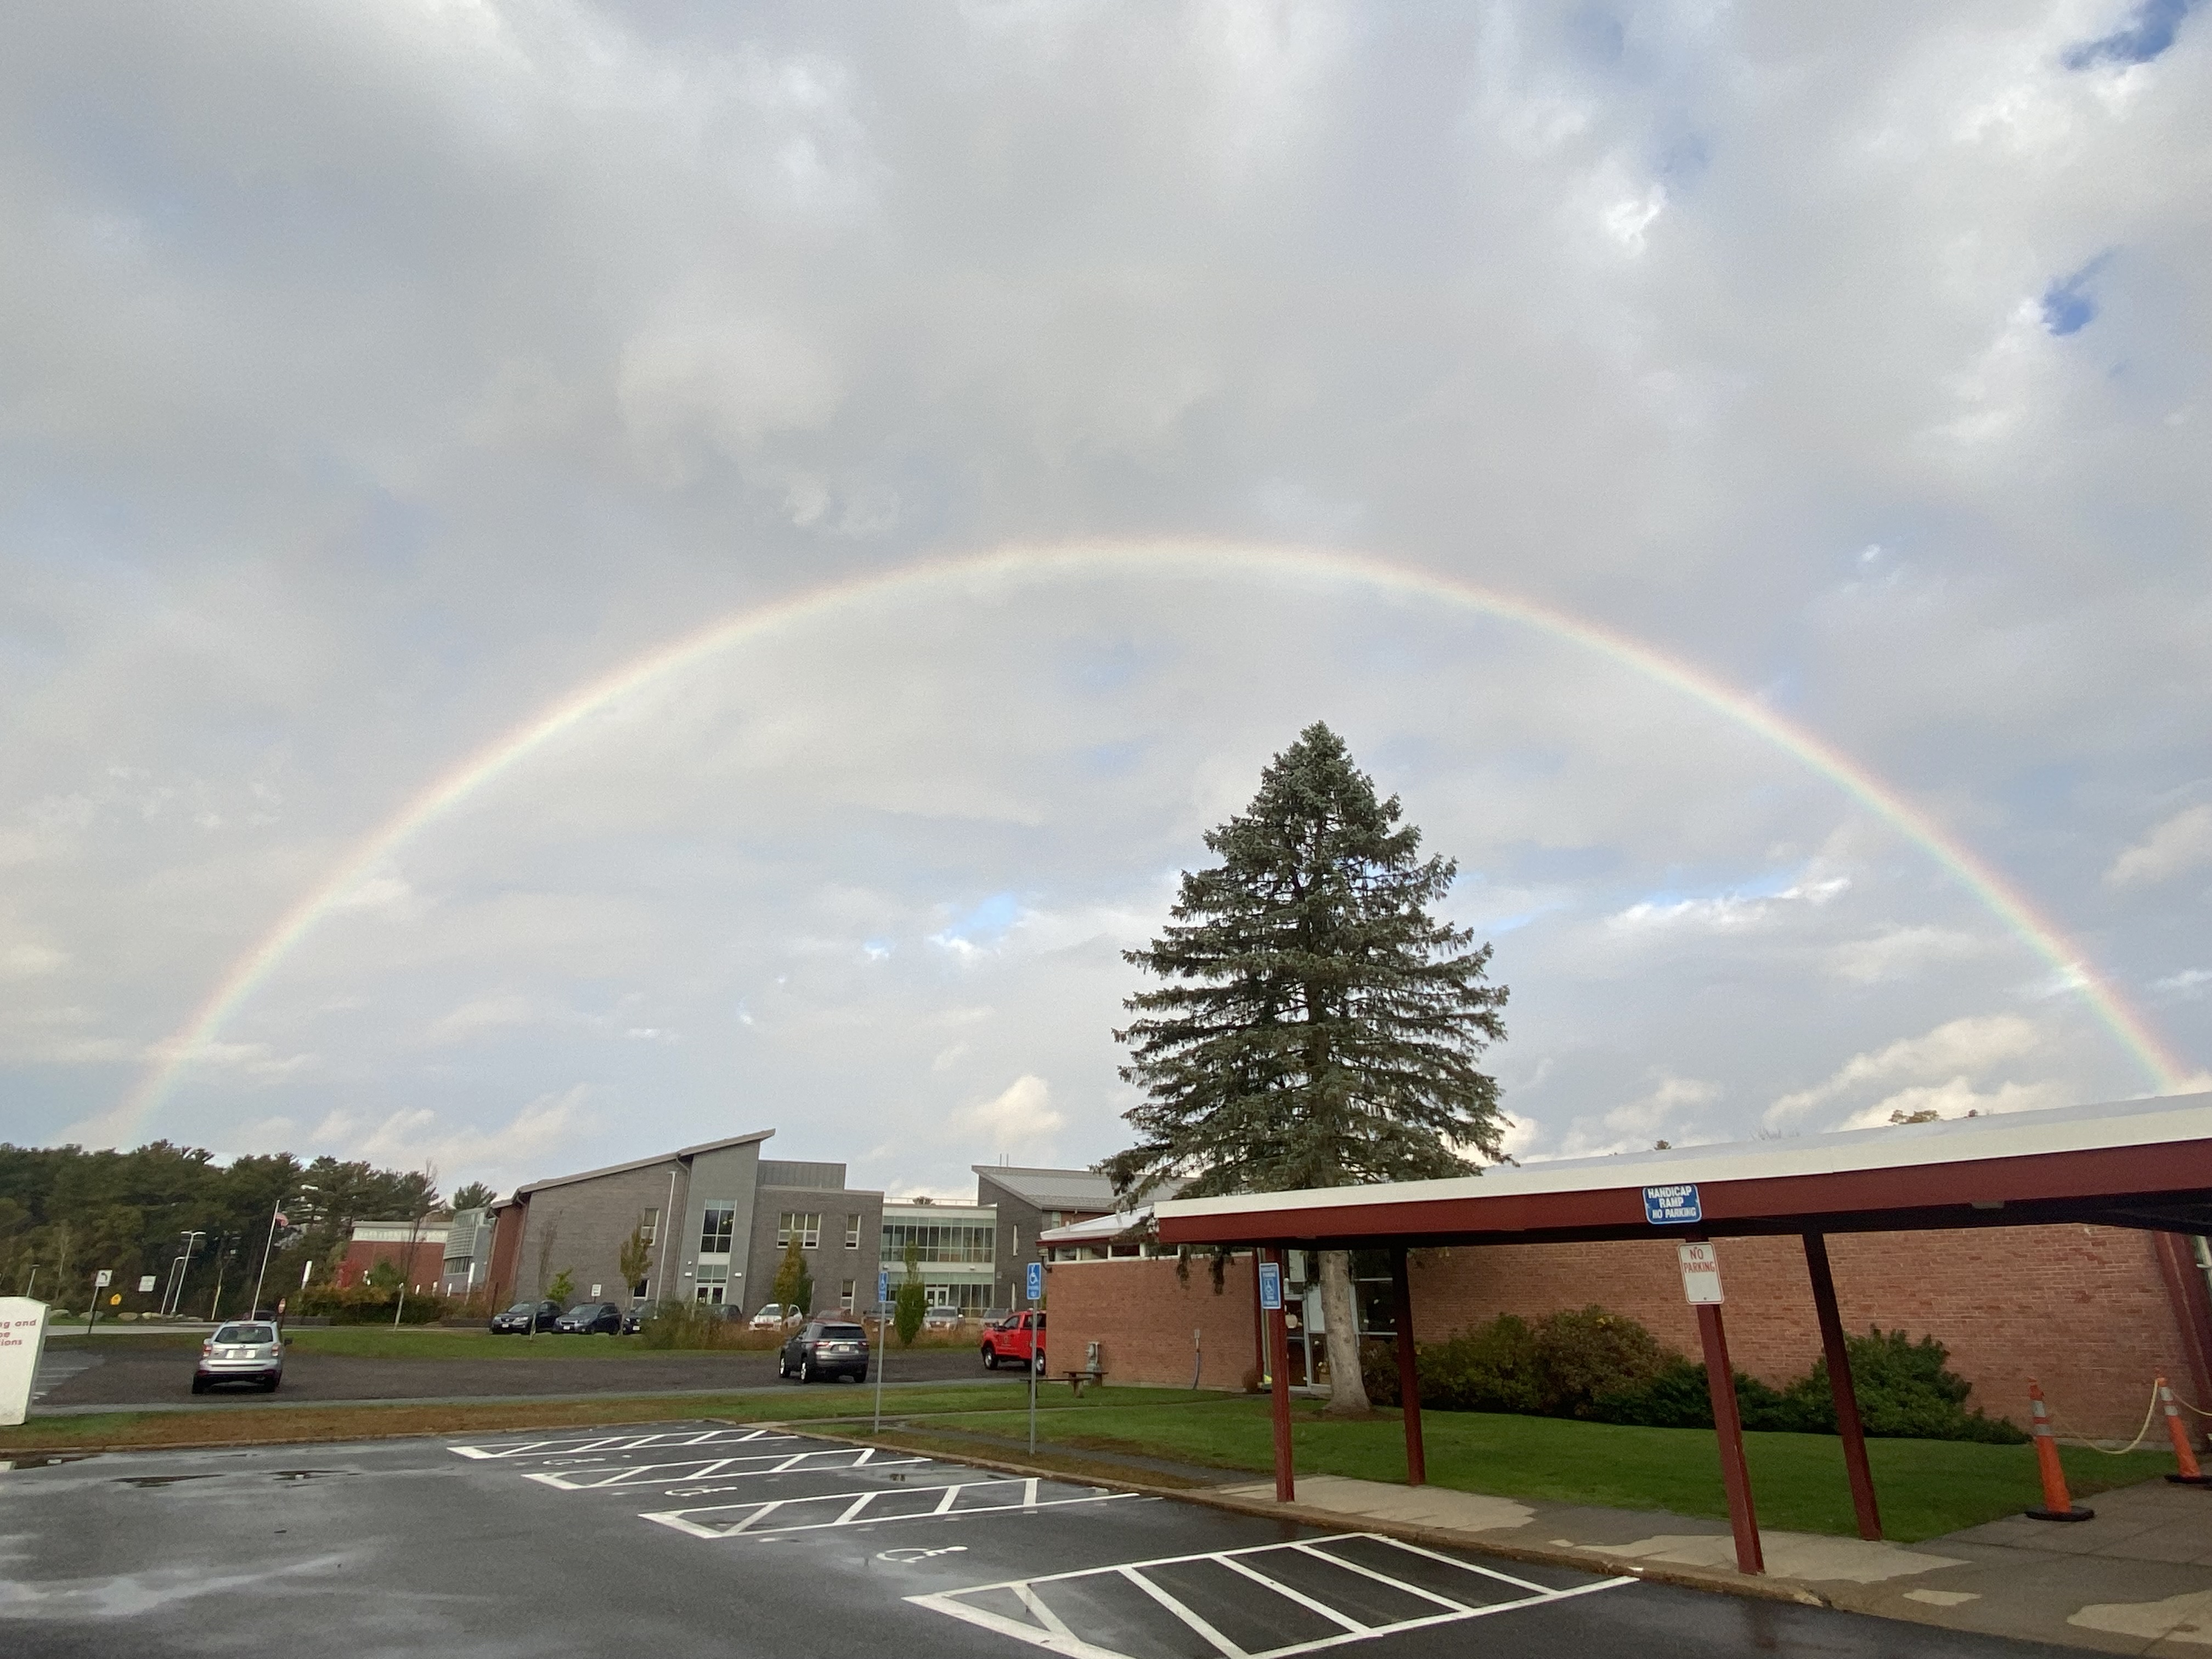 rainbow over school